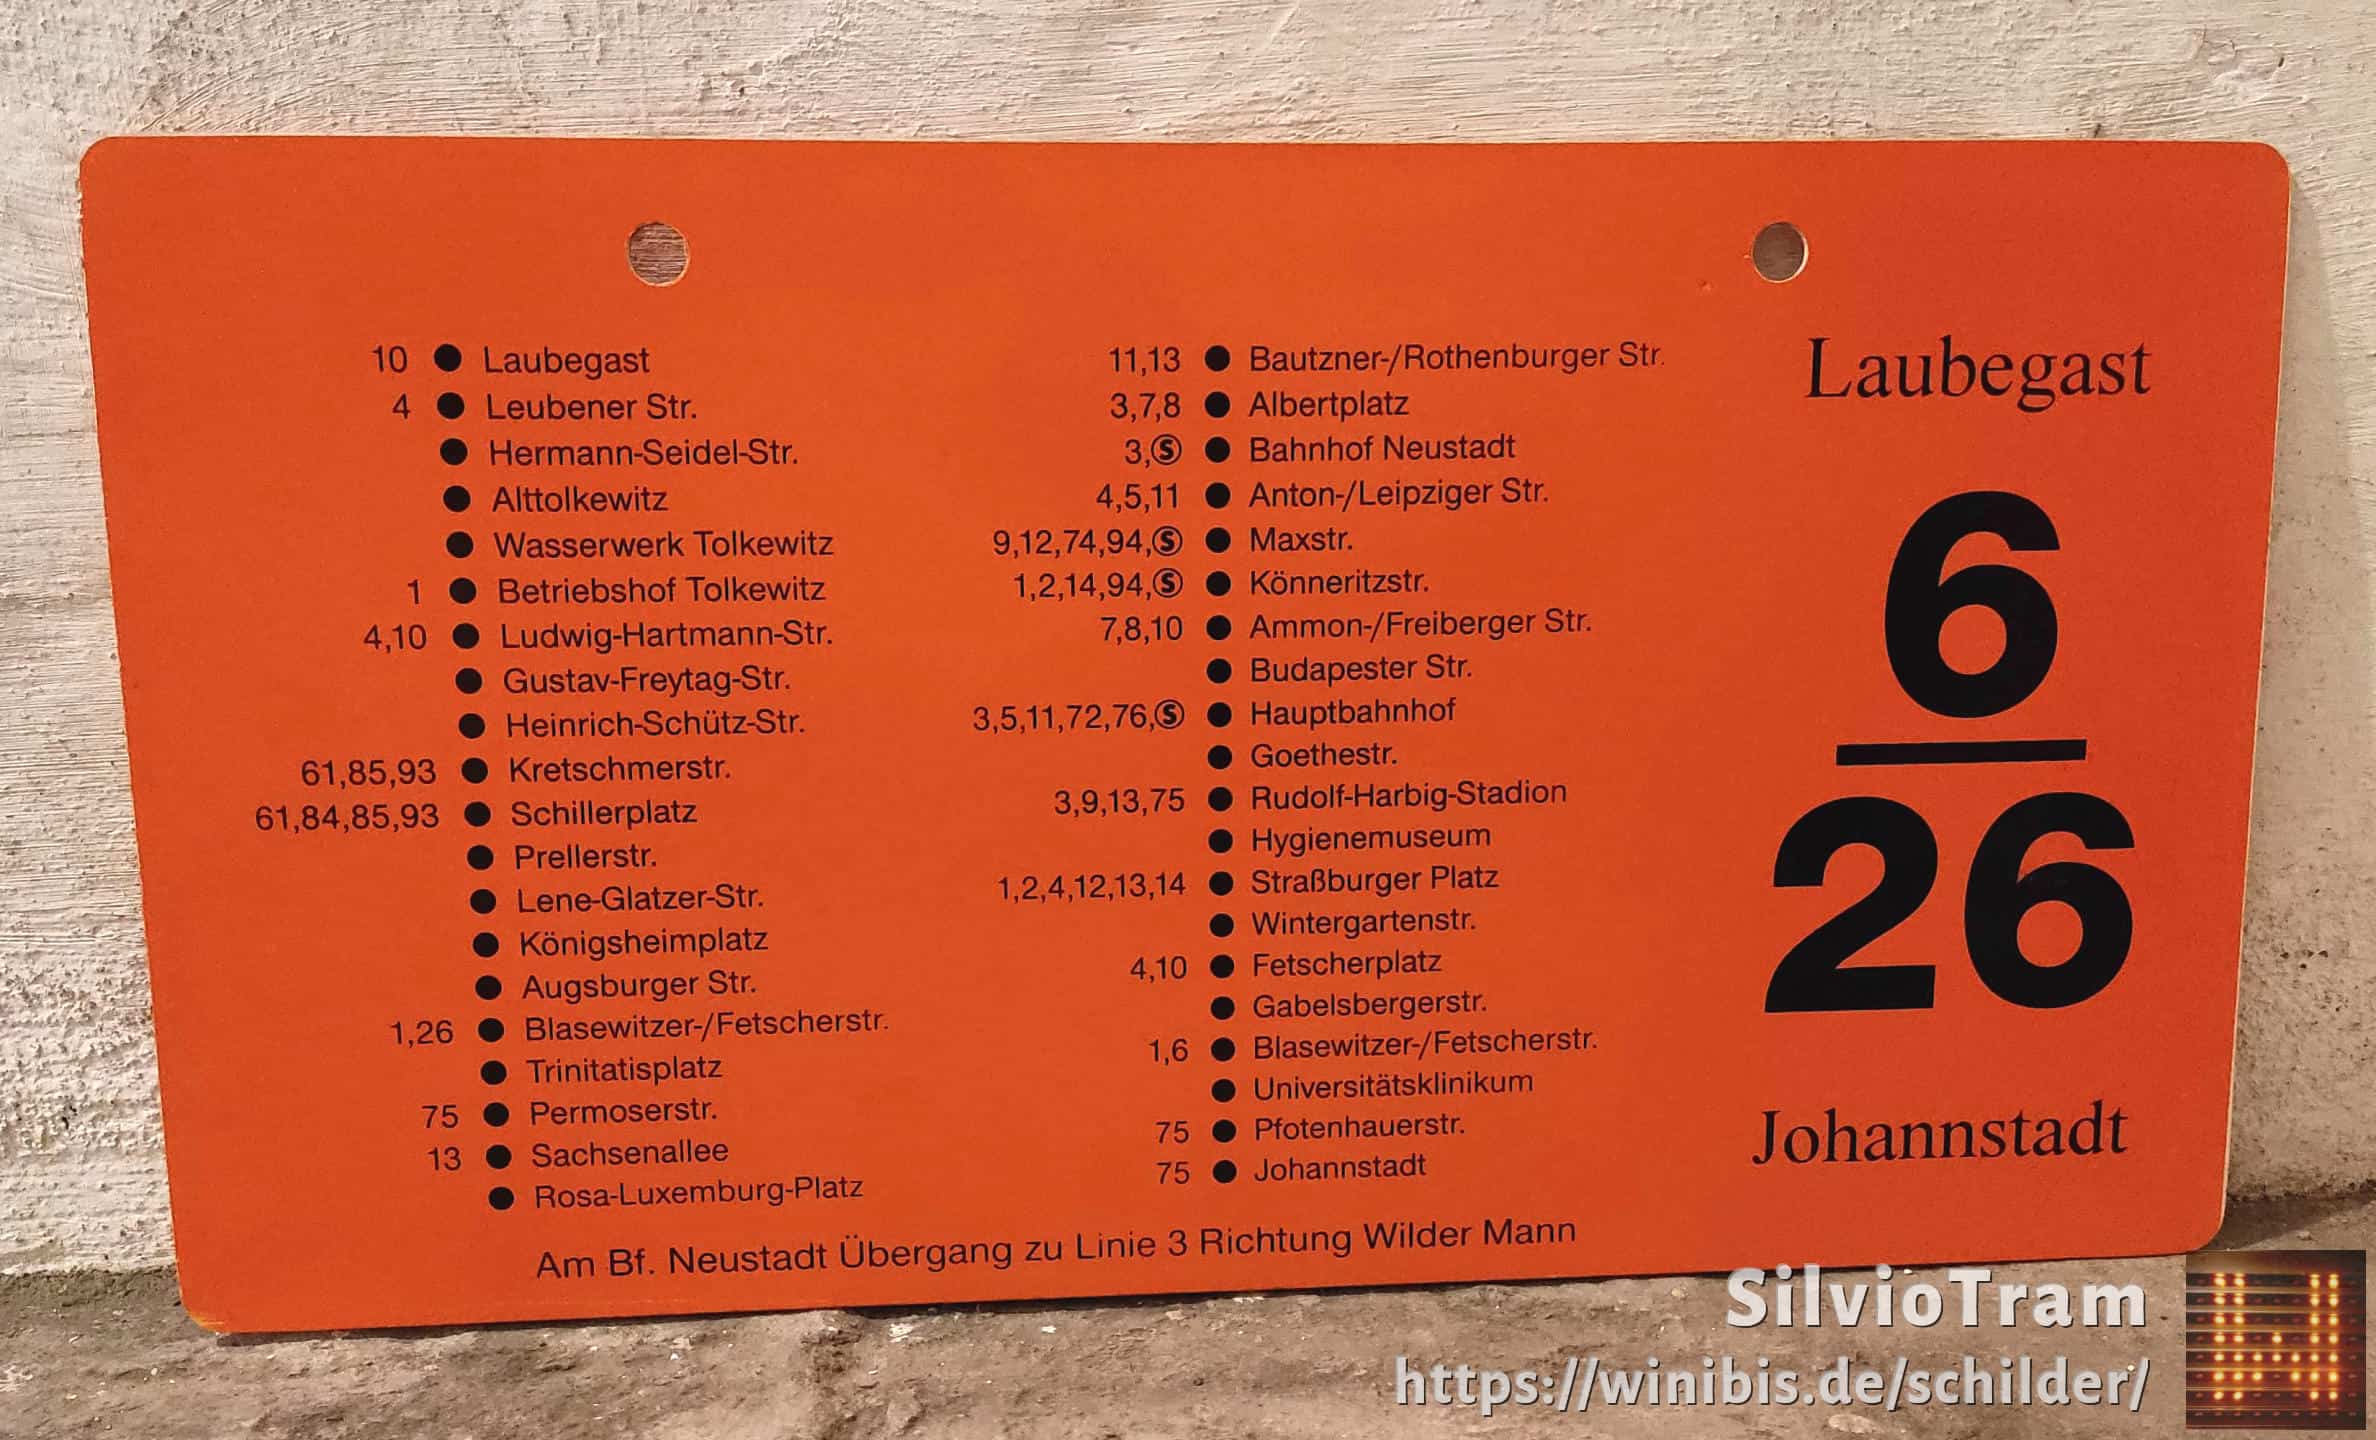 6/26 Laubegast – Johannstadt #4